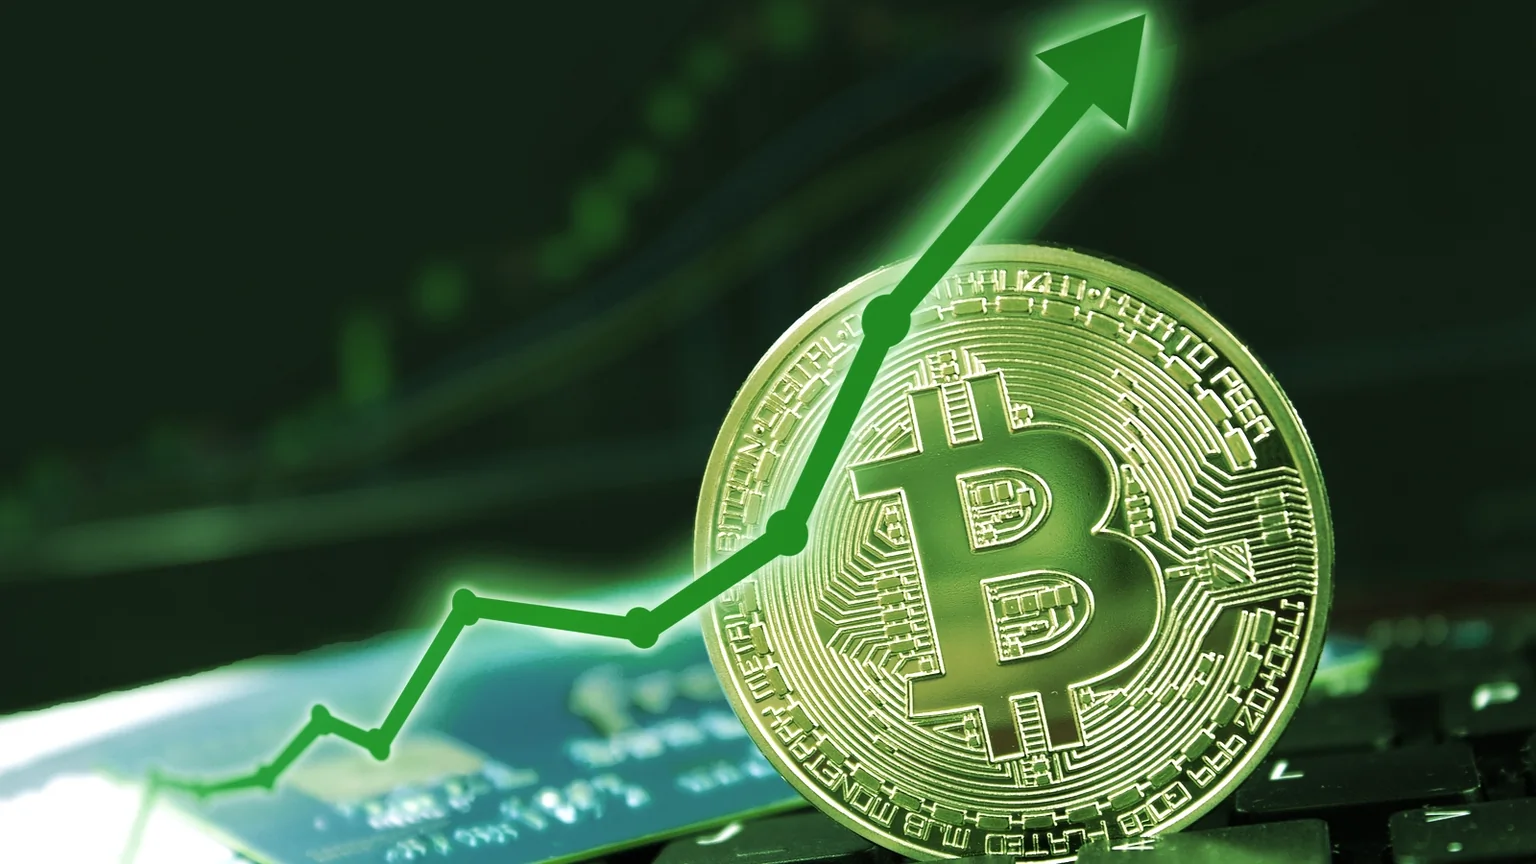 Bitcoin's price. Image: Shutterstock